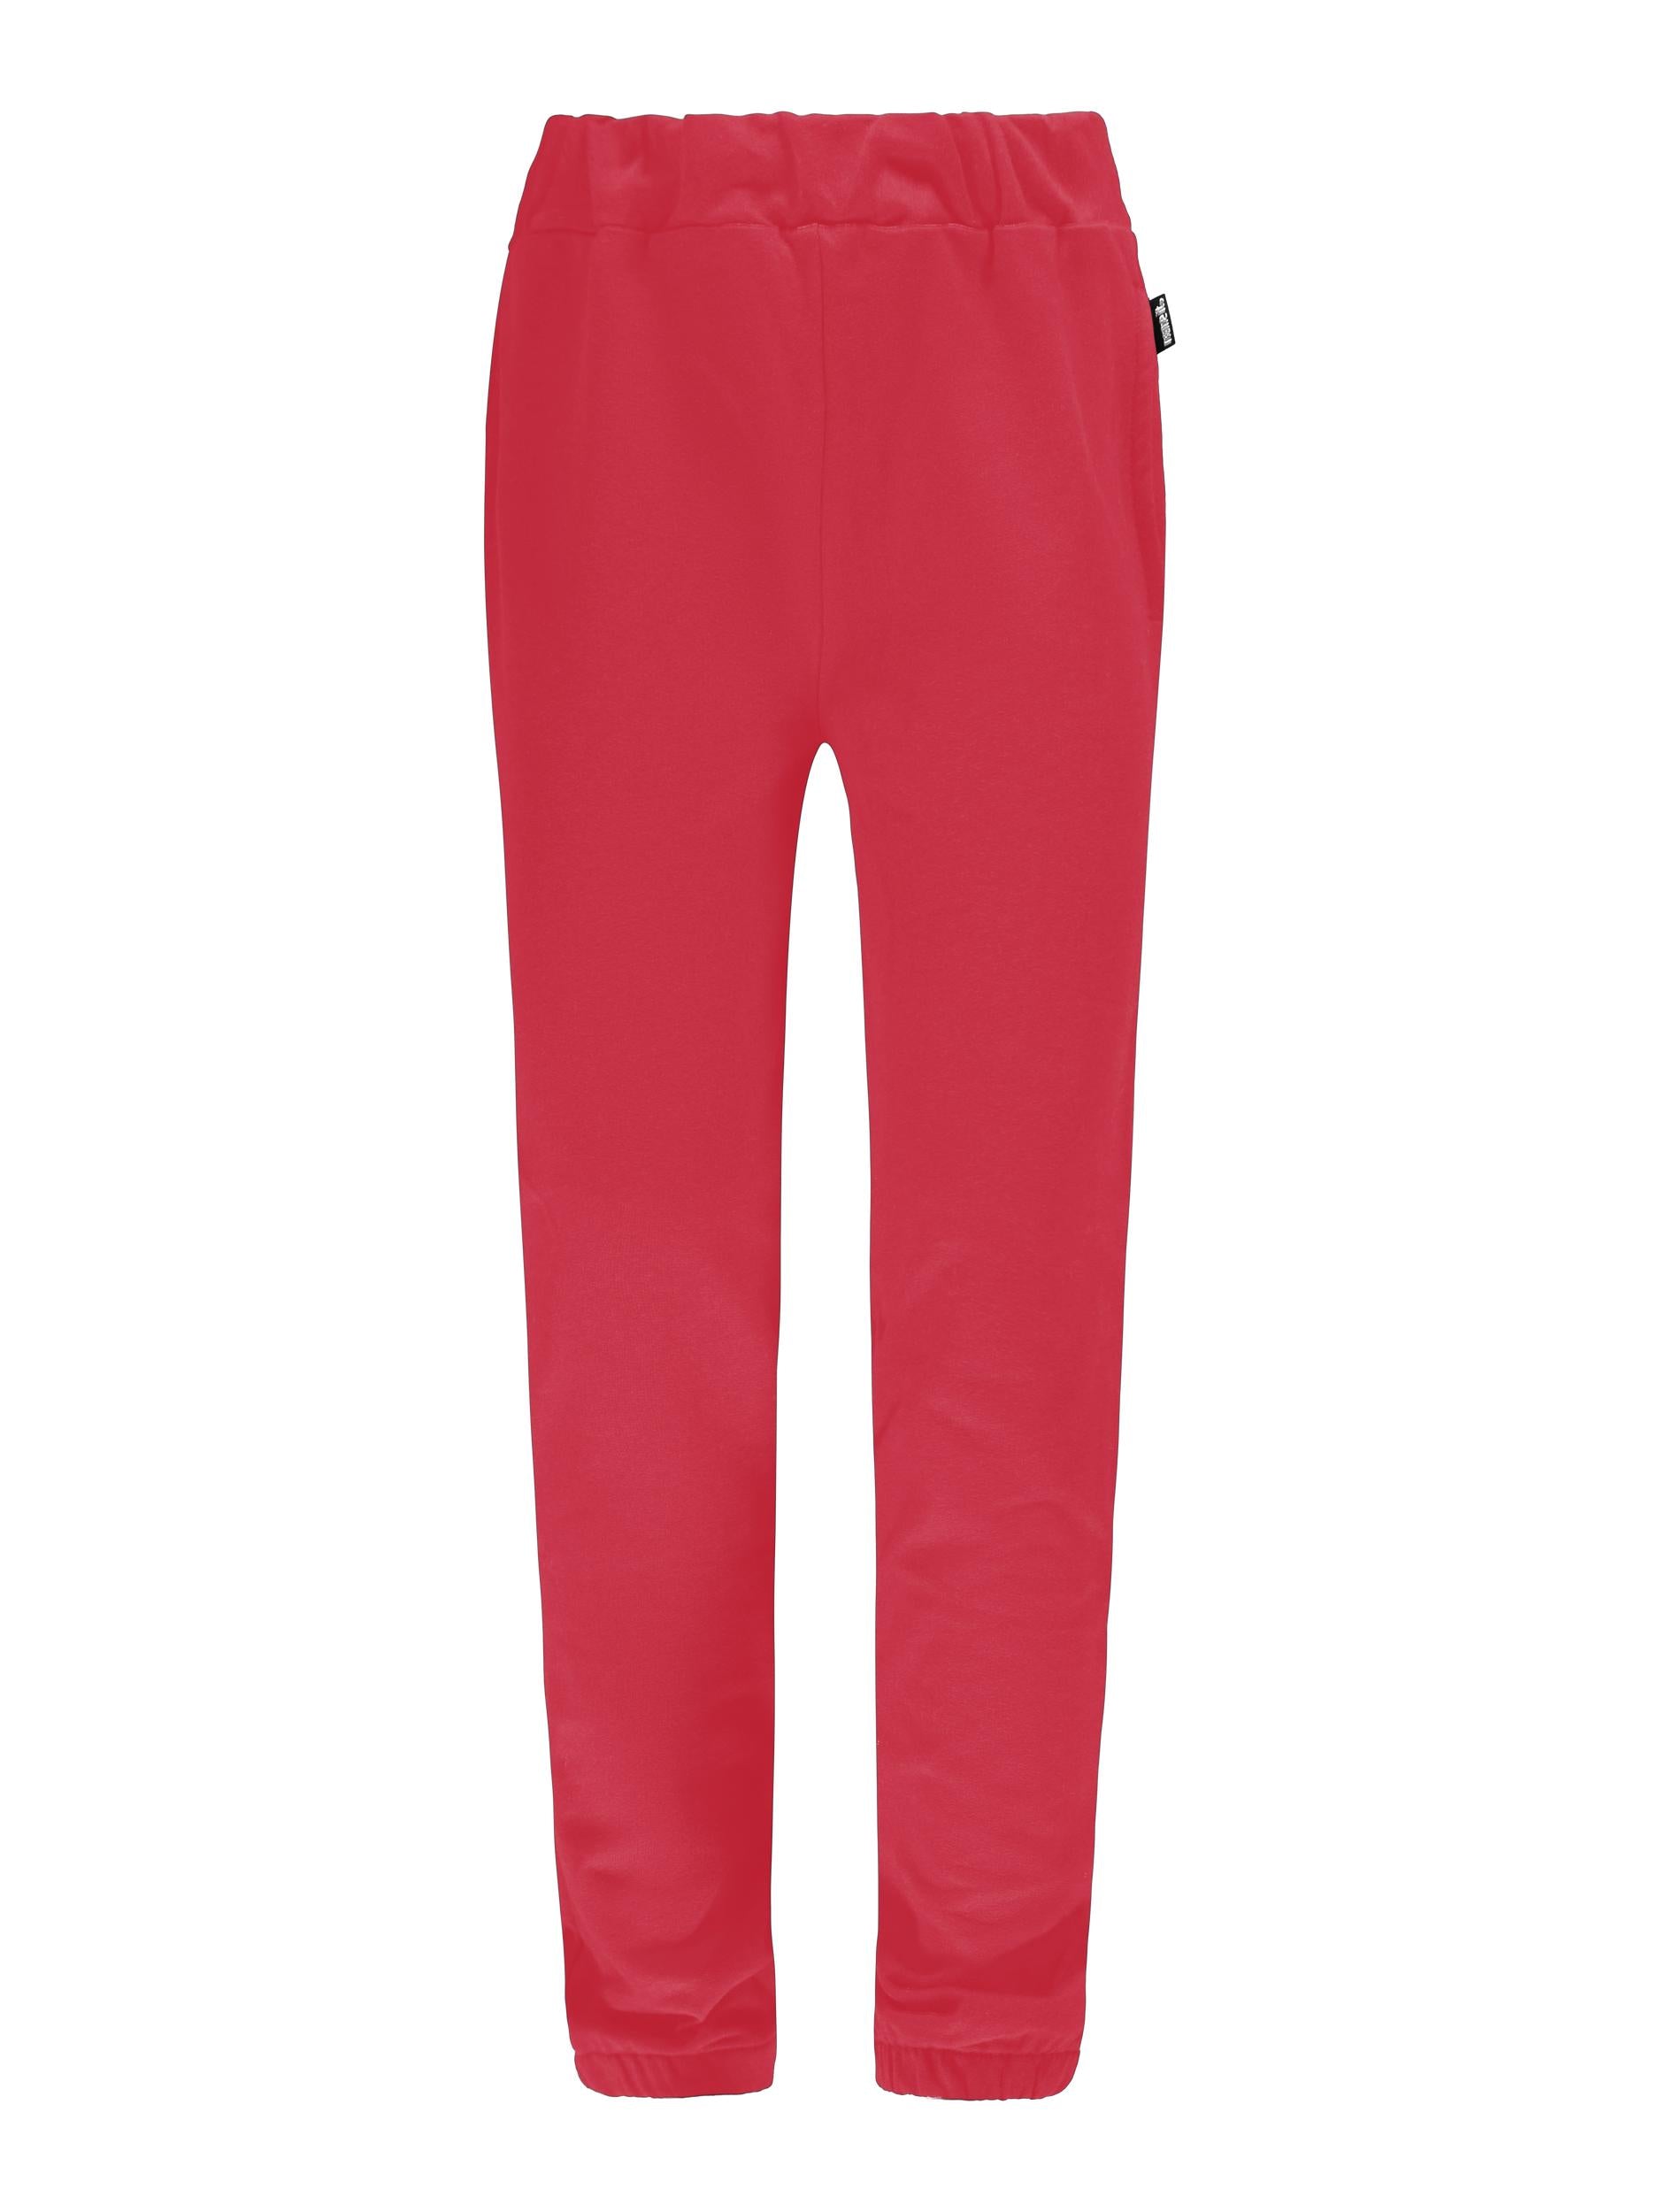 Straight Leg Red Sweat Pant - Spirit Clothing